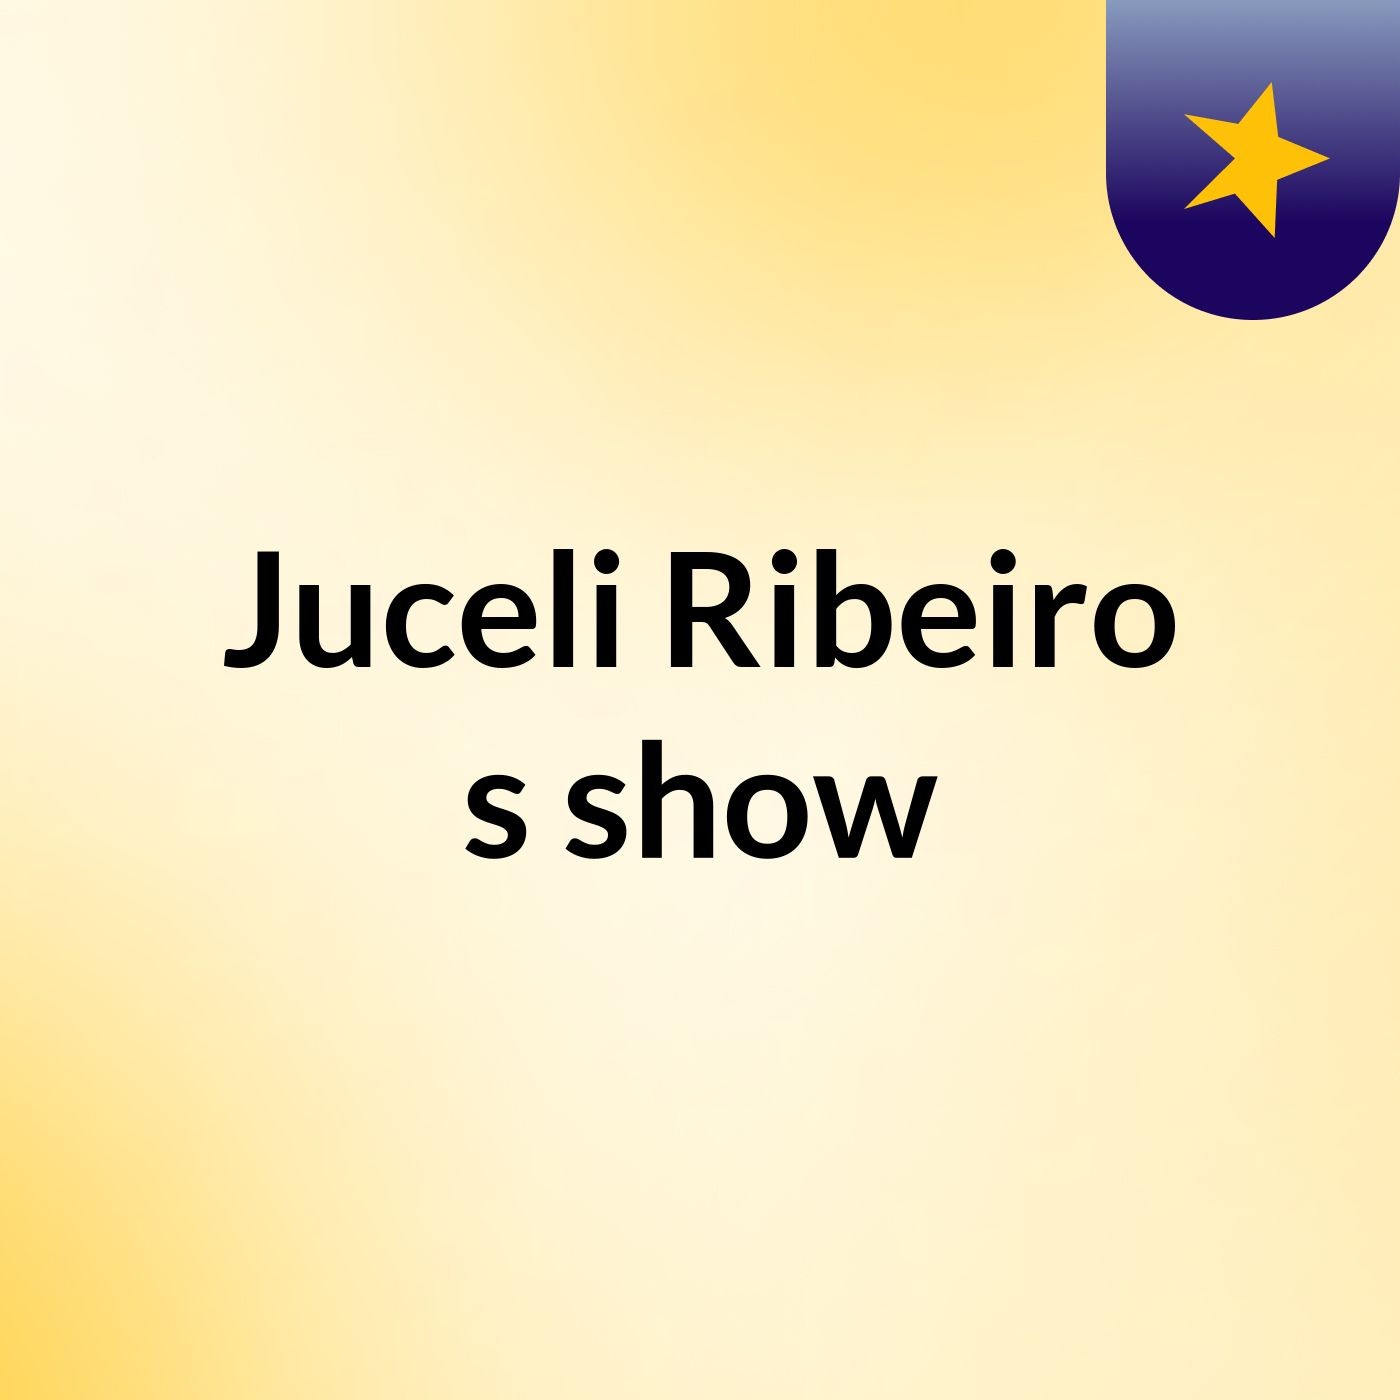 Juceli Ribeiro's show